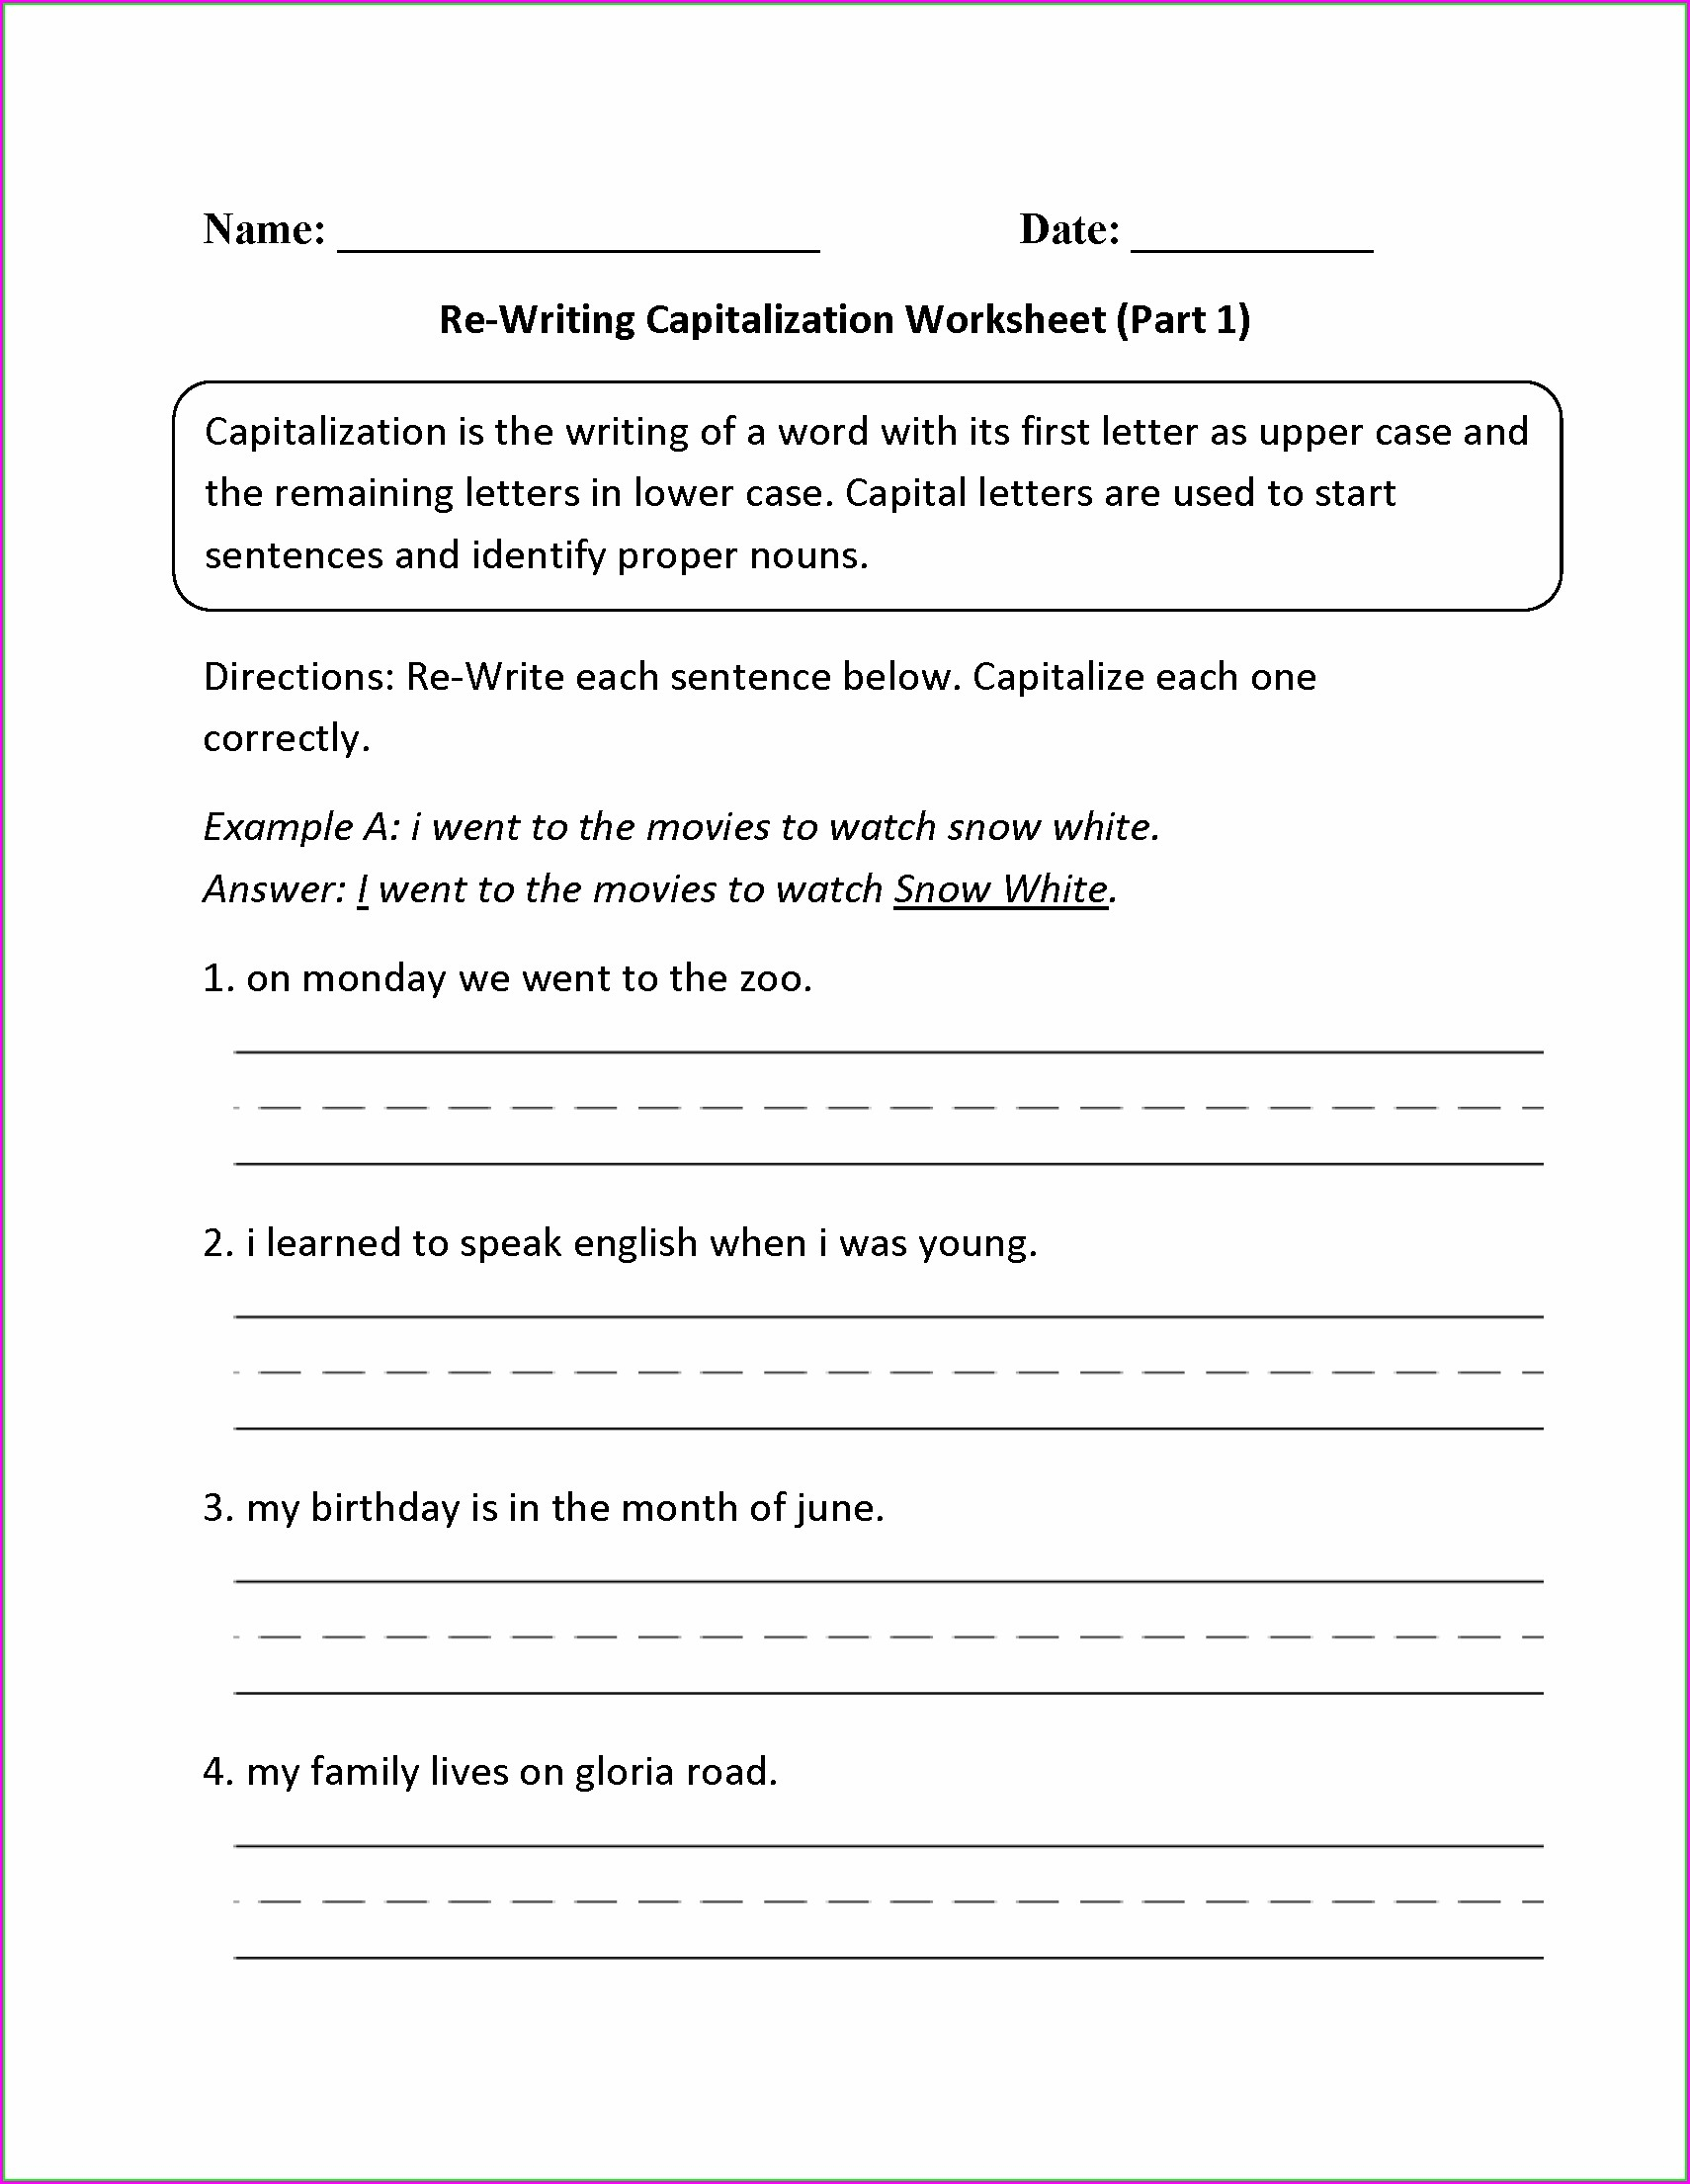 capitalize-and-punctuate-sentence-worksheet-3rd-grade-sentenceworksheets